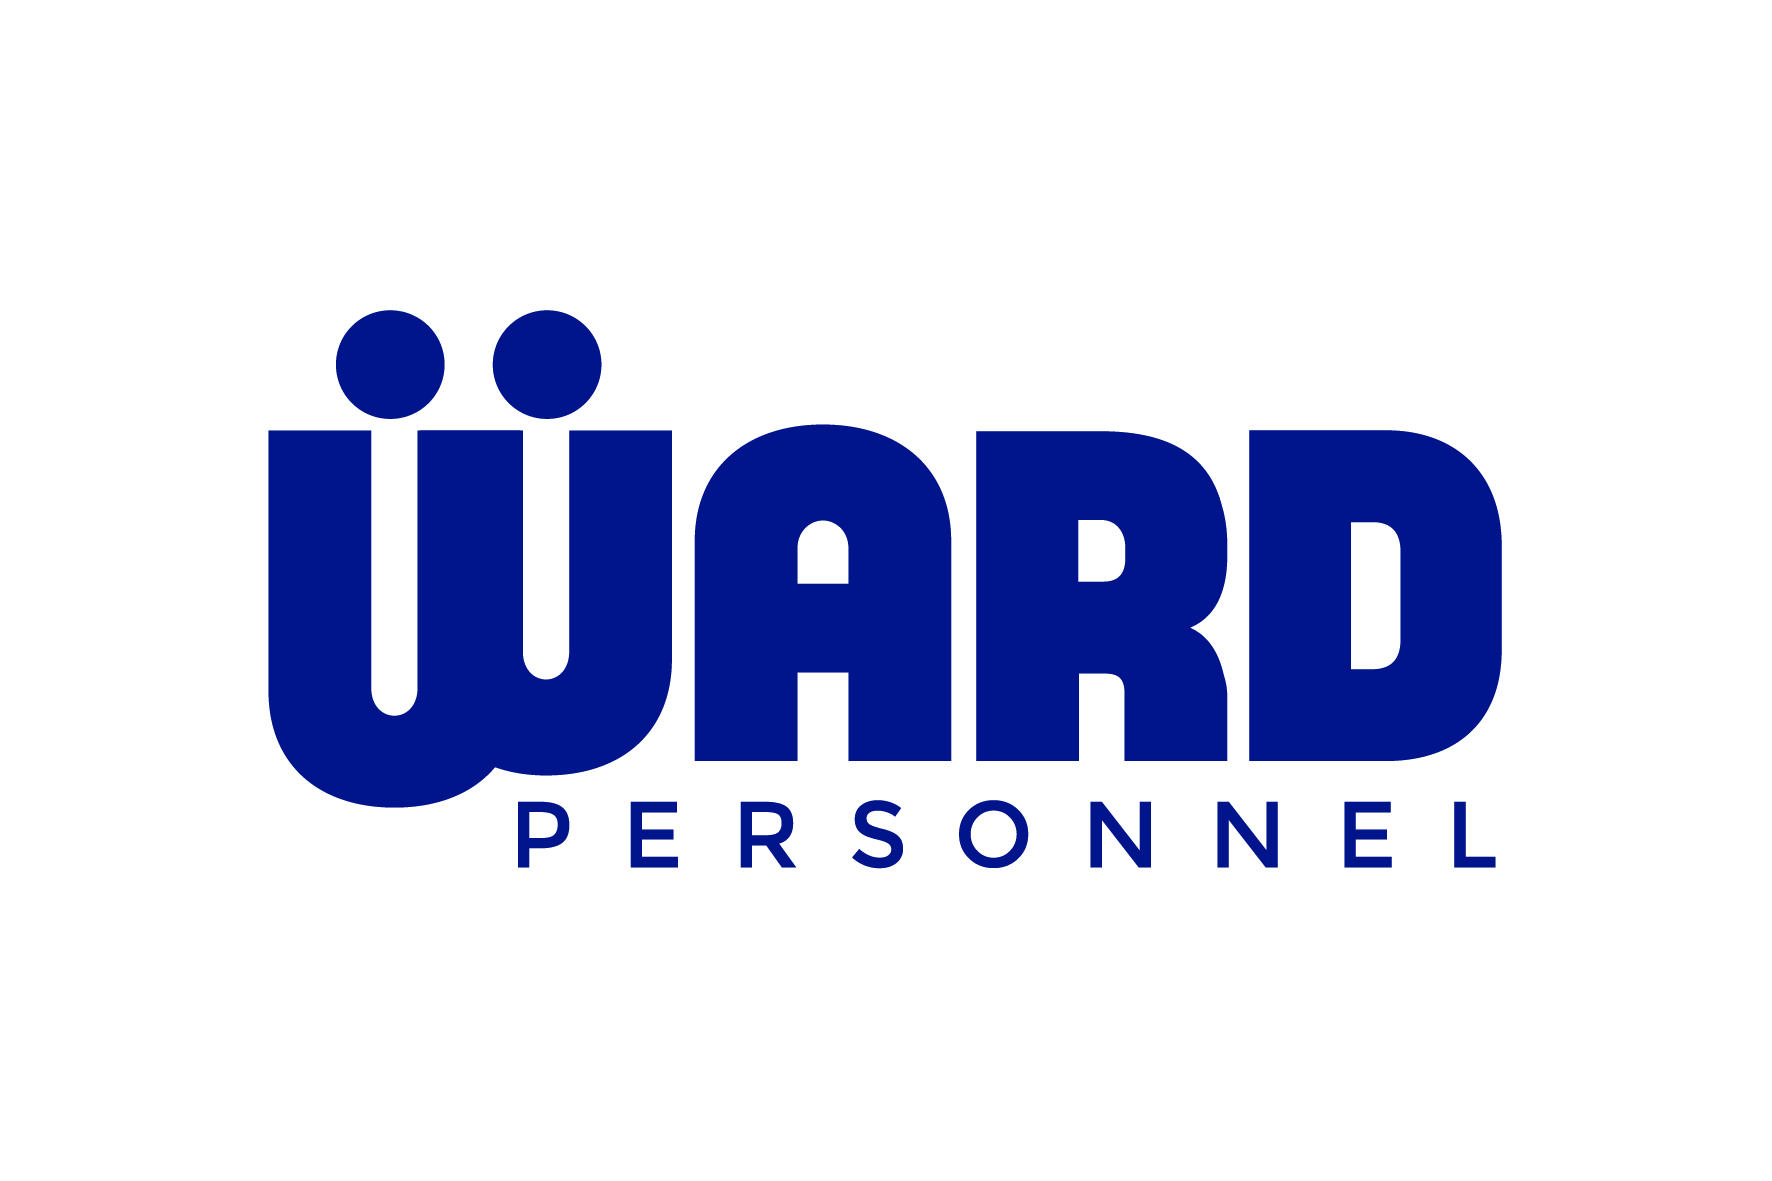 Logo Ward Personnel Sp. z o.o.